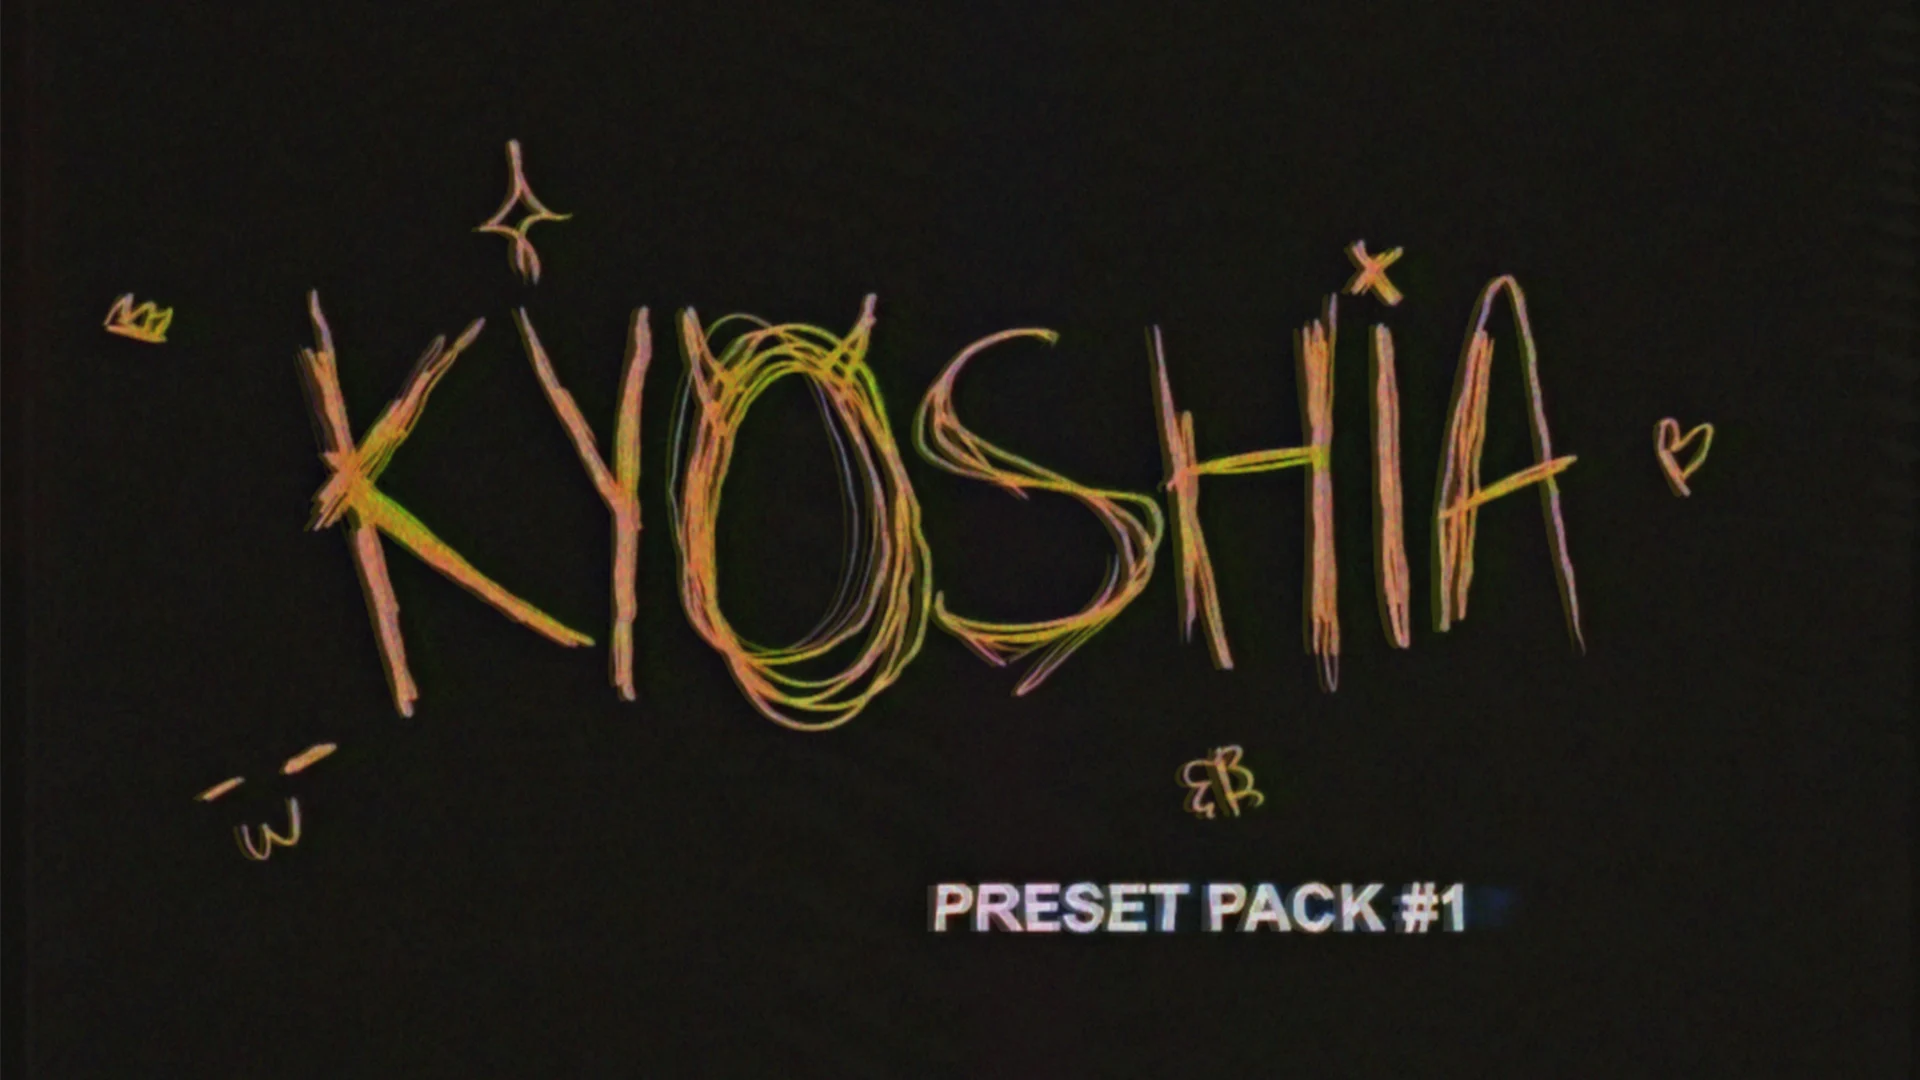 Kyoshia Preset Pack 预设包